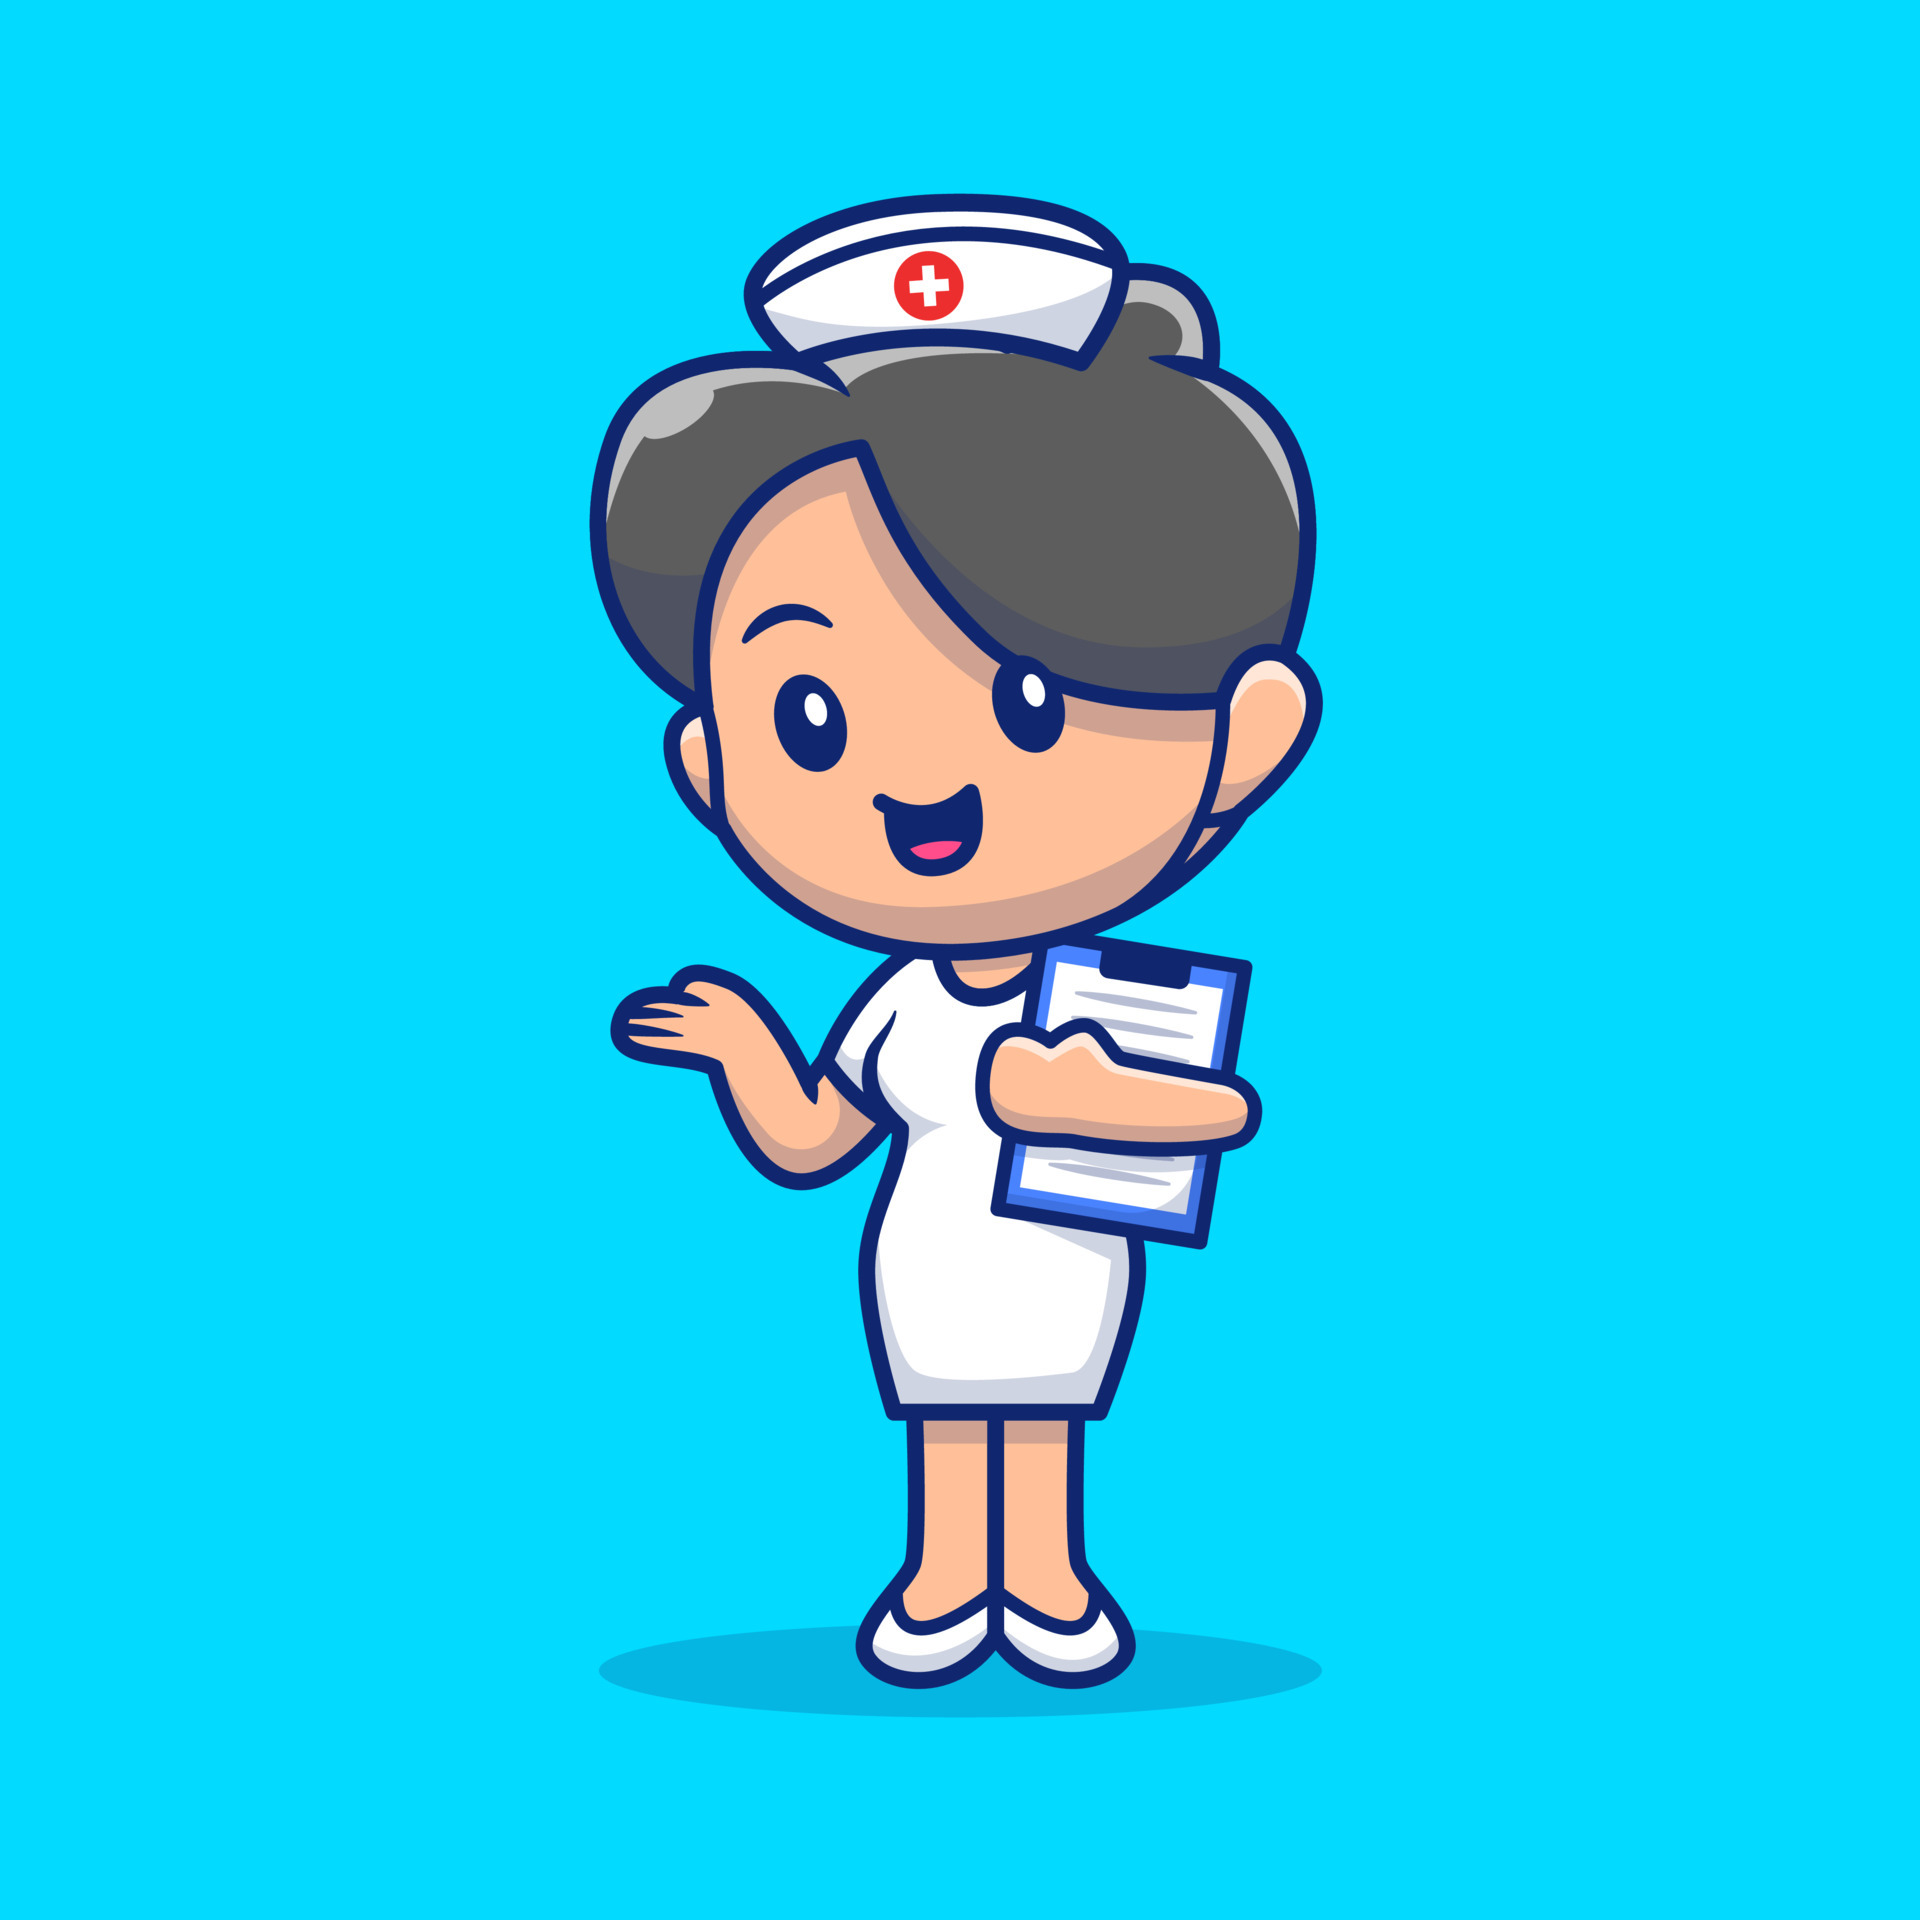 Desenho animado de médico e enfermeira de vetor